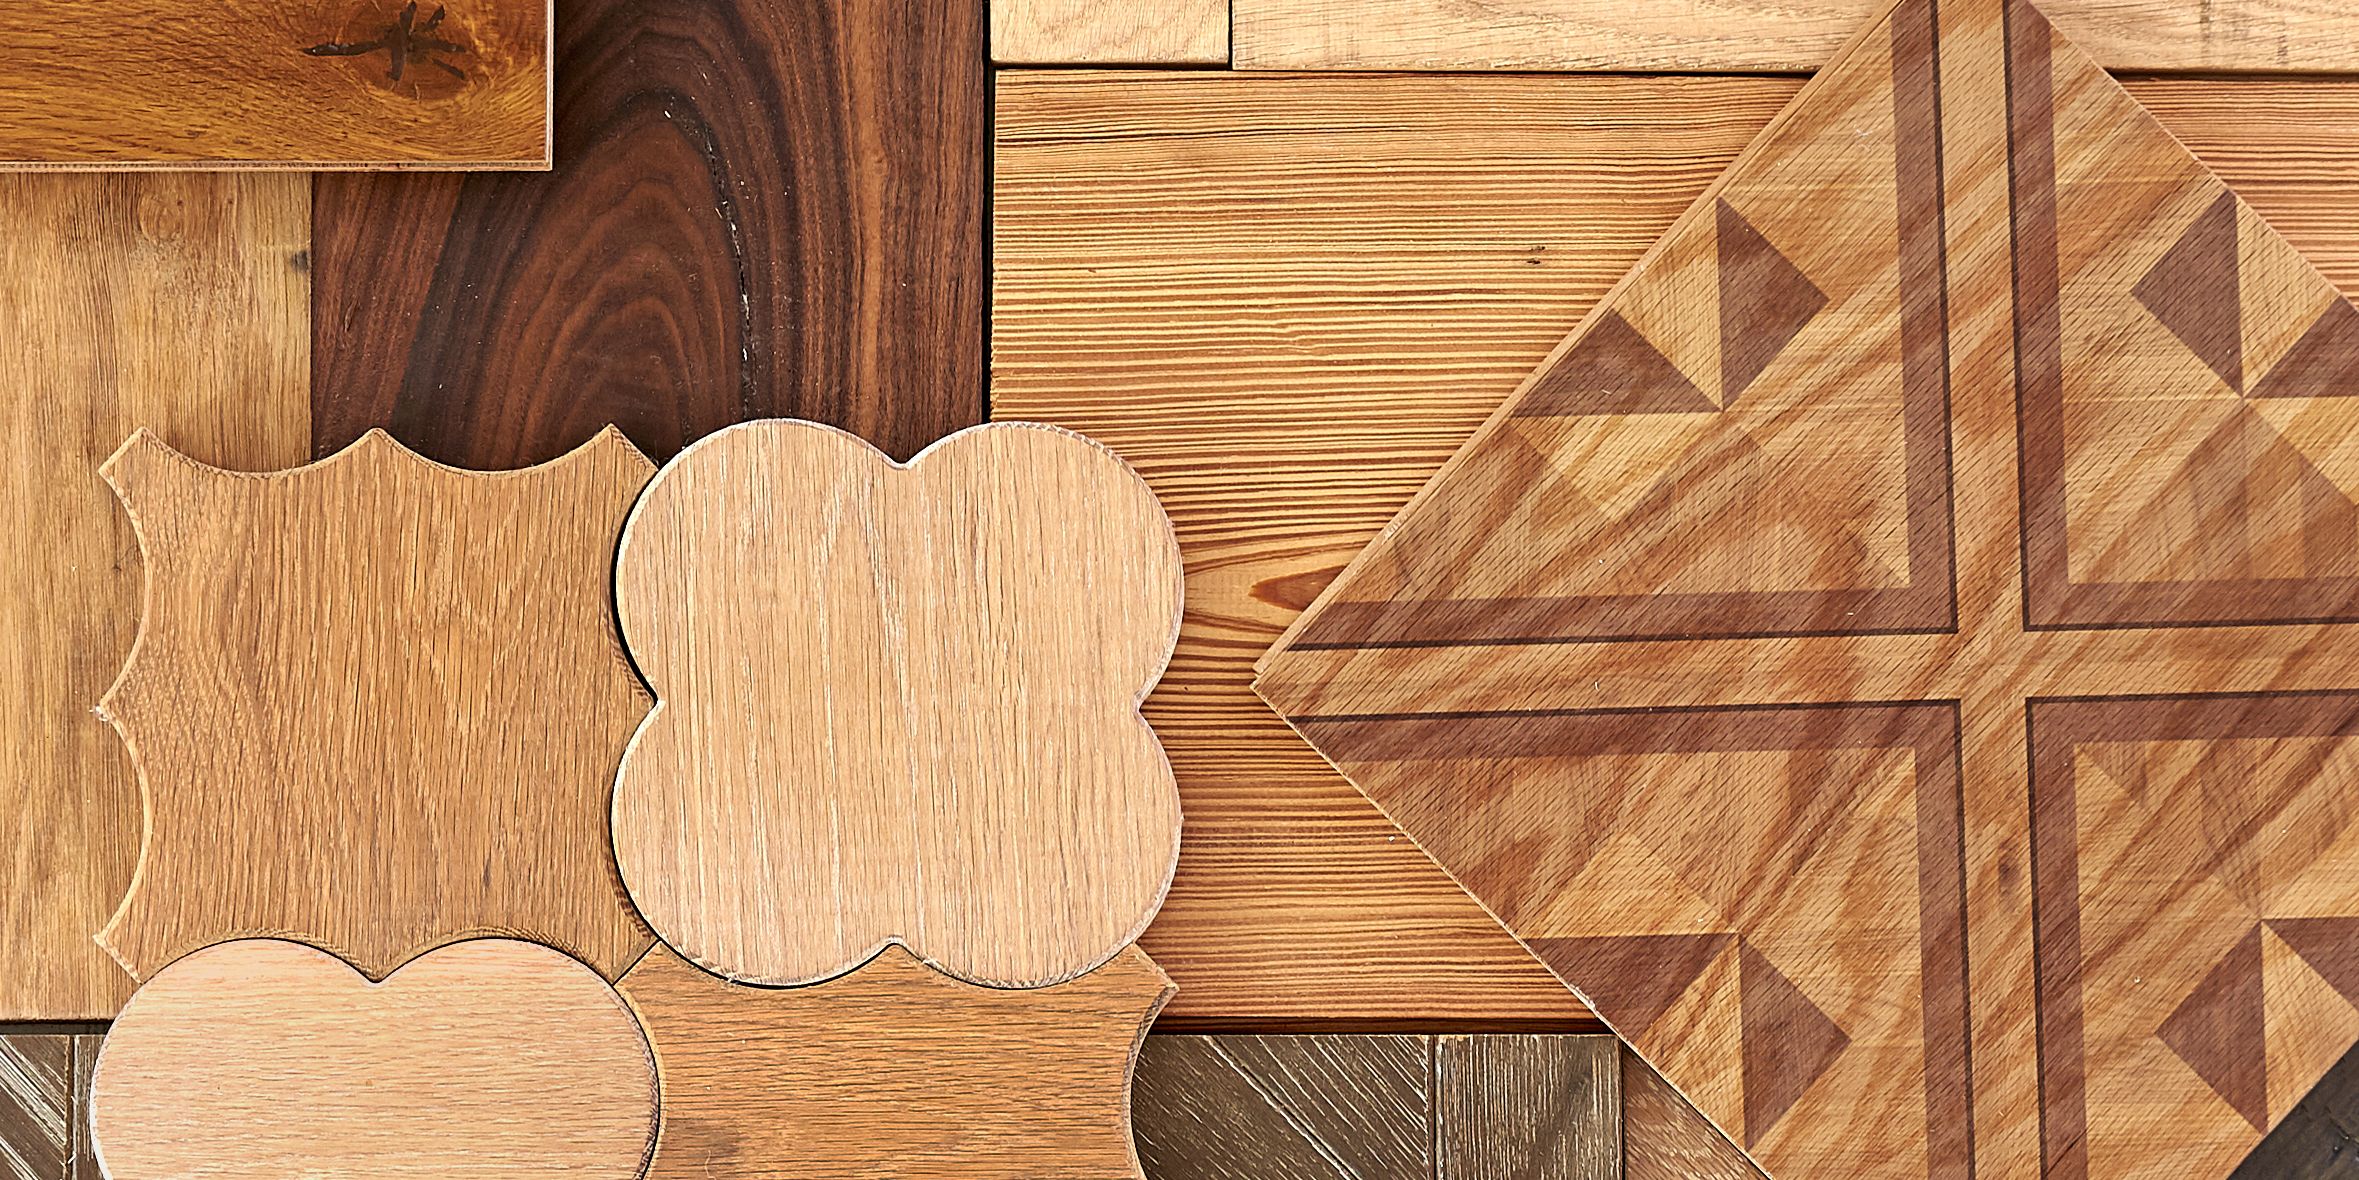 Hardwood Flooring Cost Types Of, Real Hardwood Floors Cost